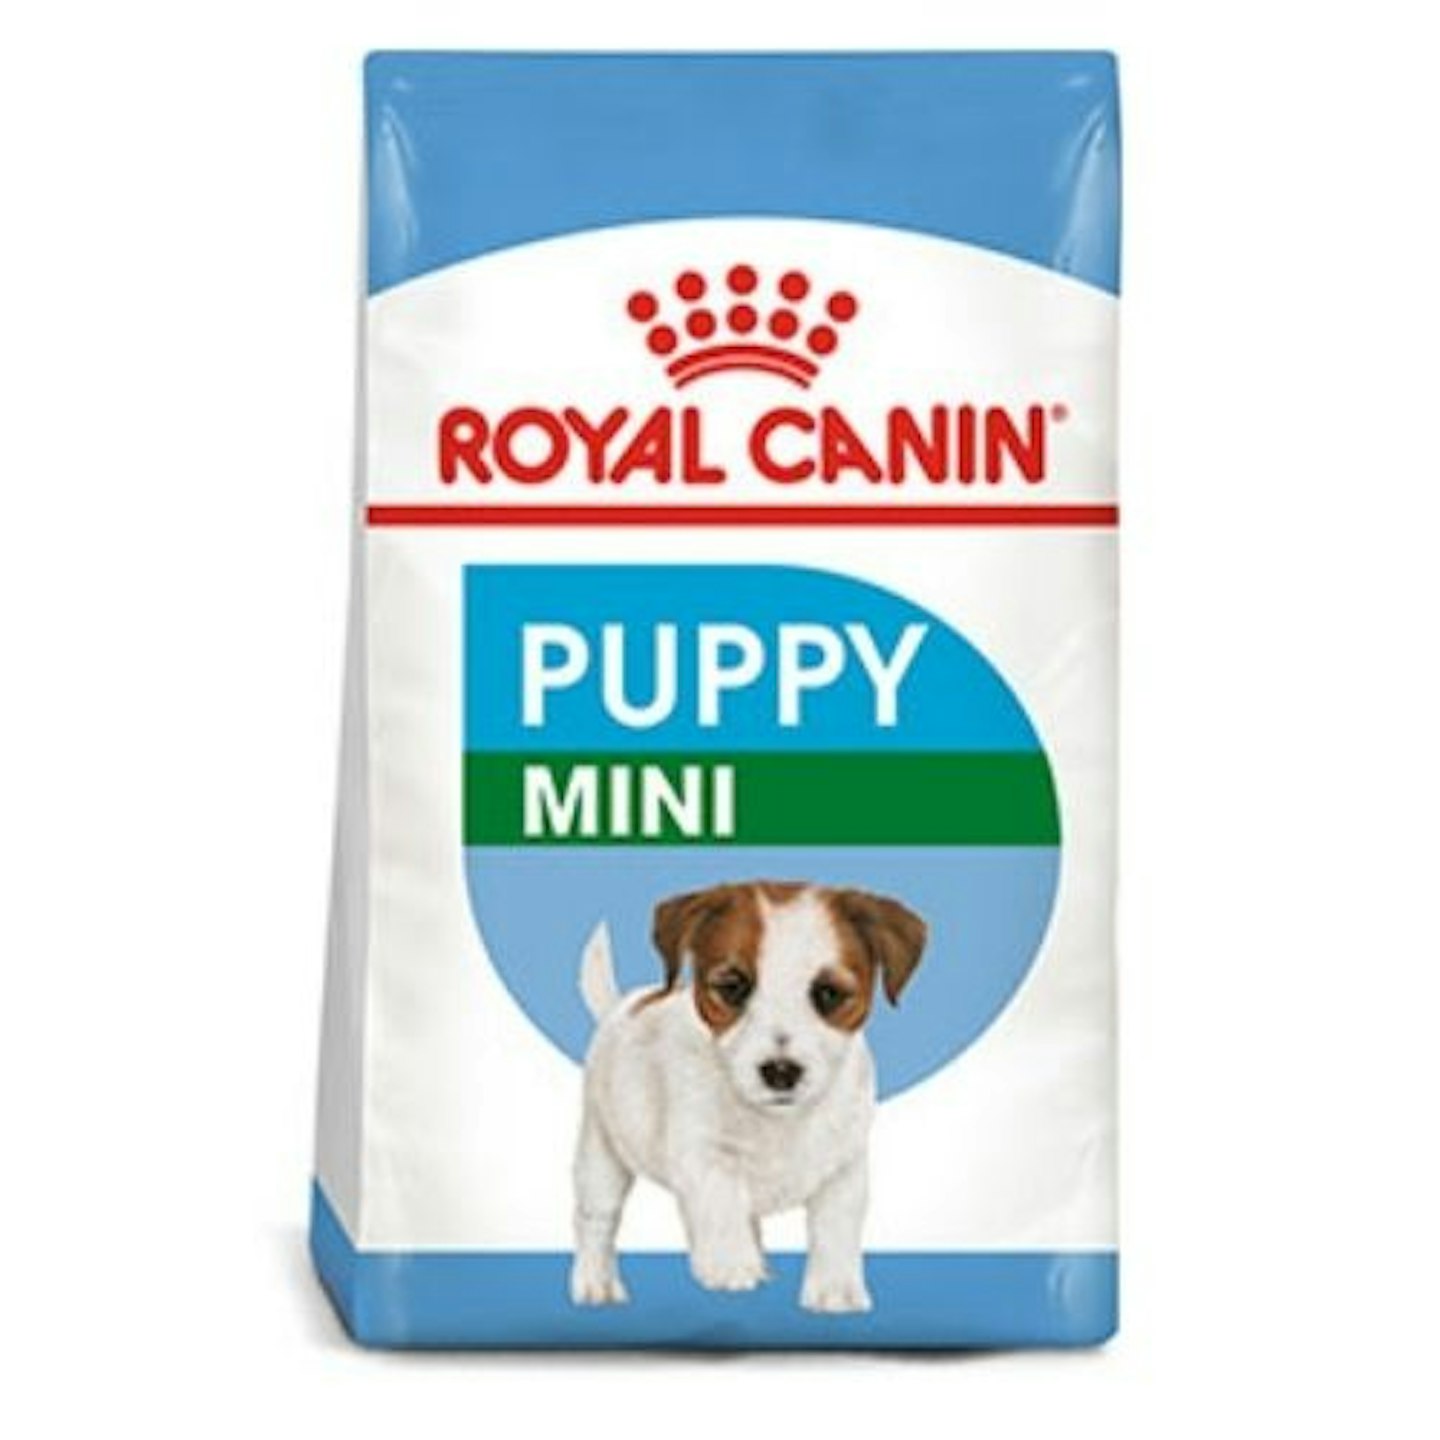 Royal Canin Mini Puppy Food bag